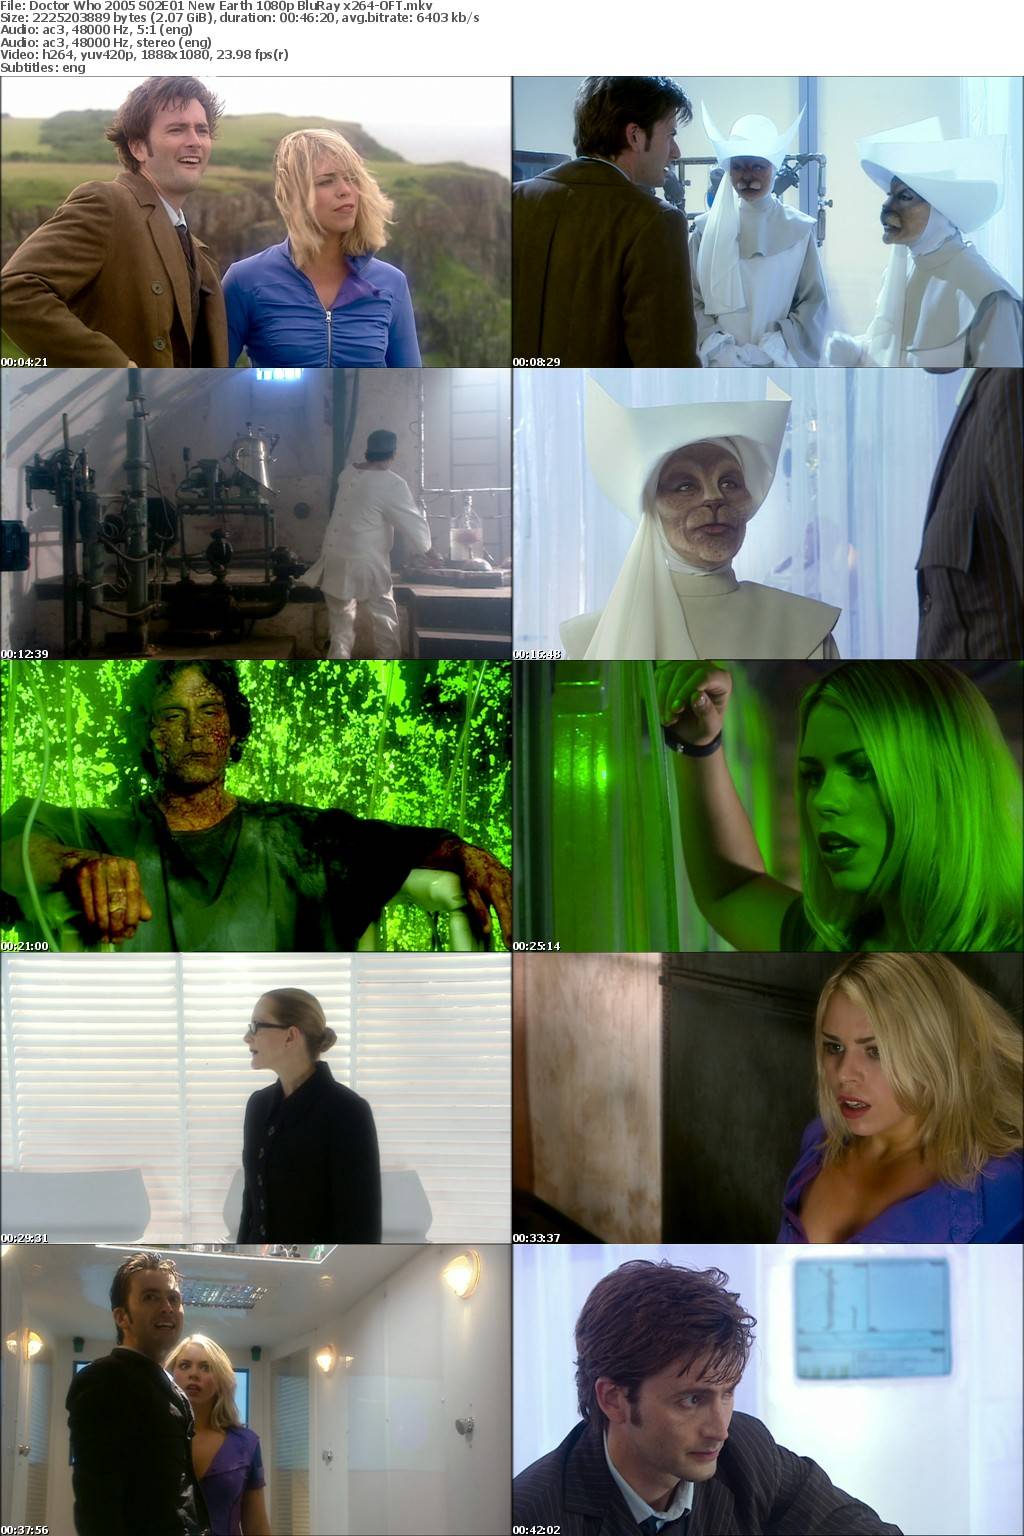 Doctor Who 2005 S02E01 New Earth 1080p BluRay x264-OFT